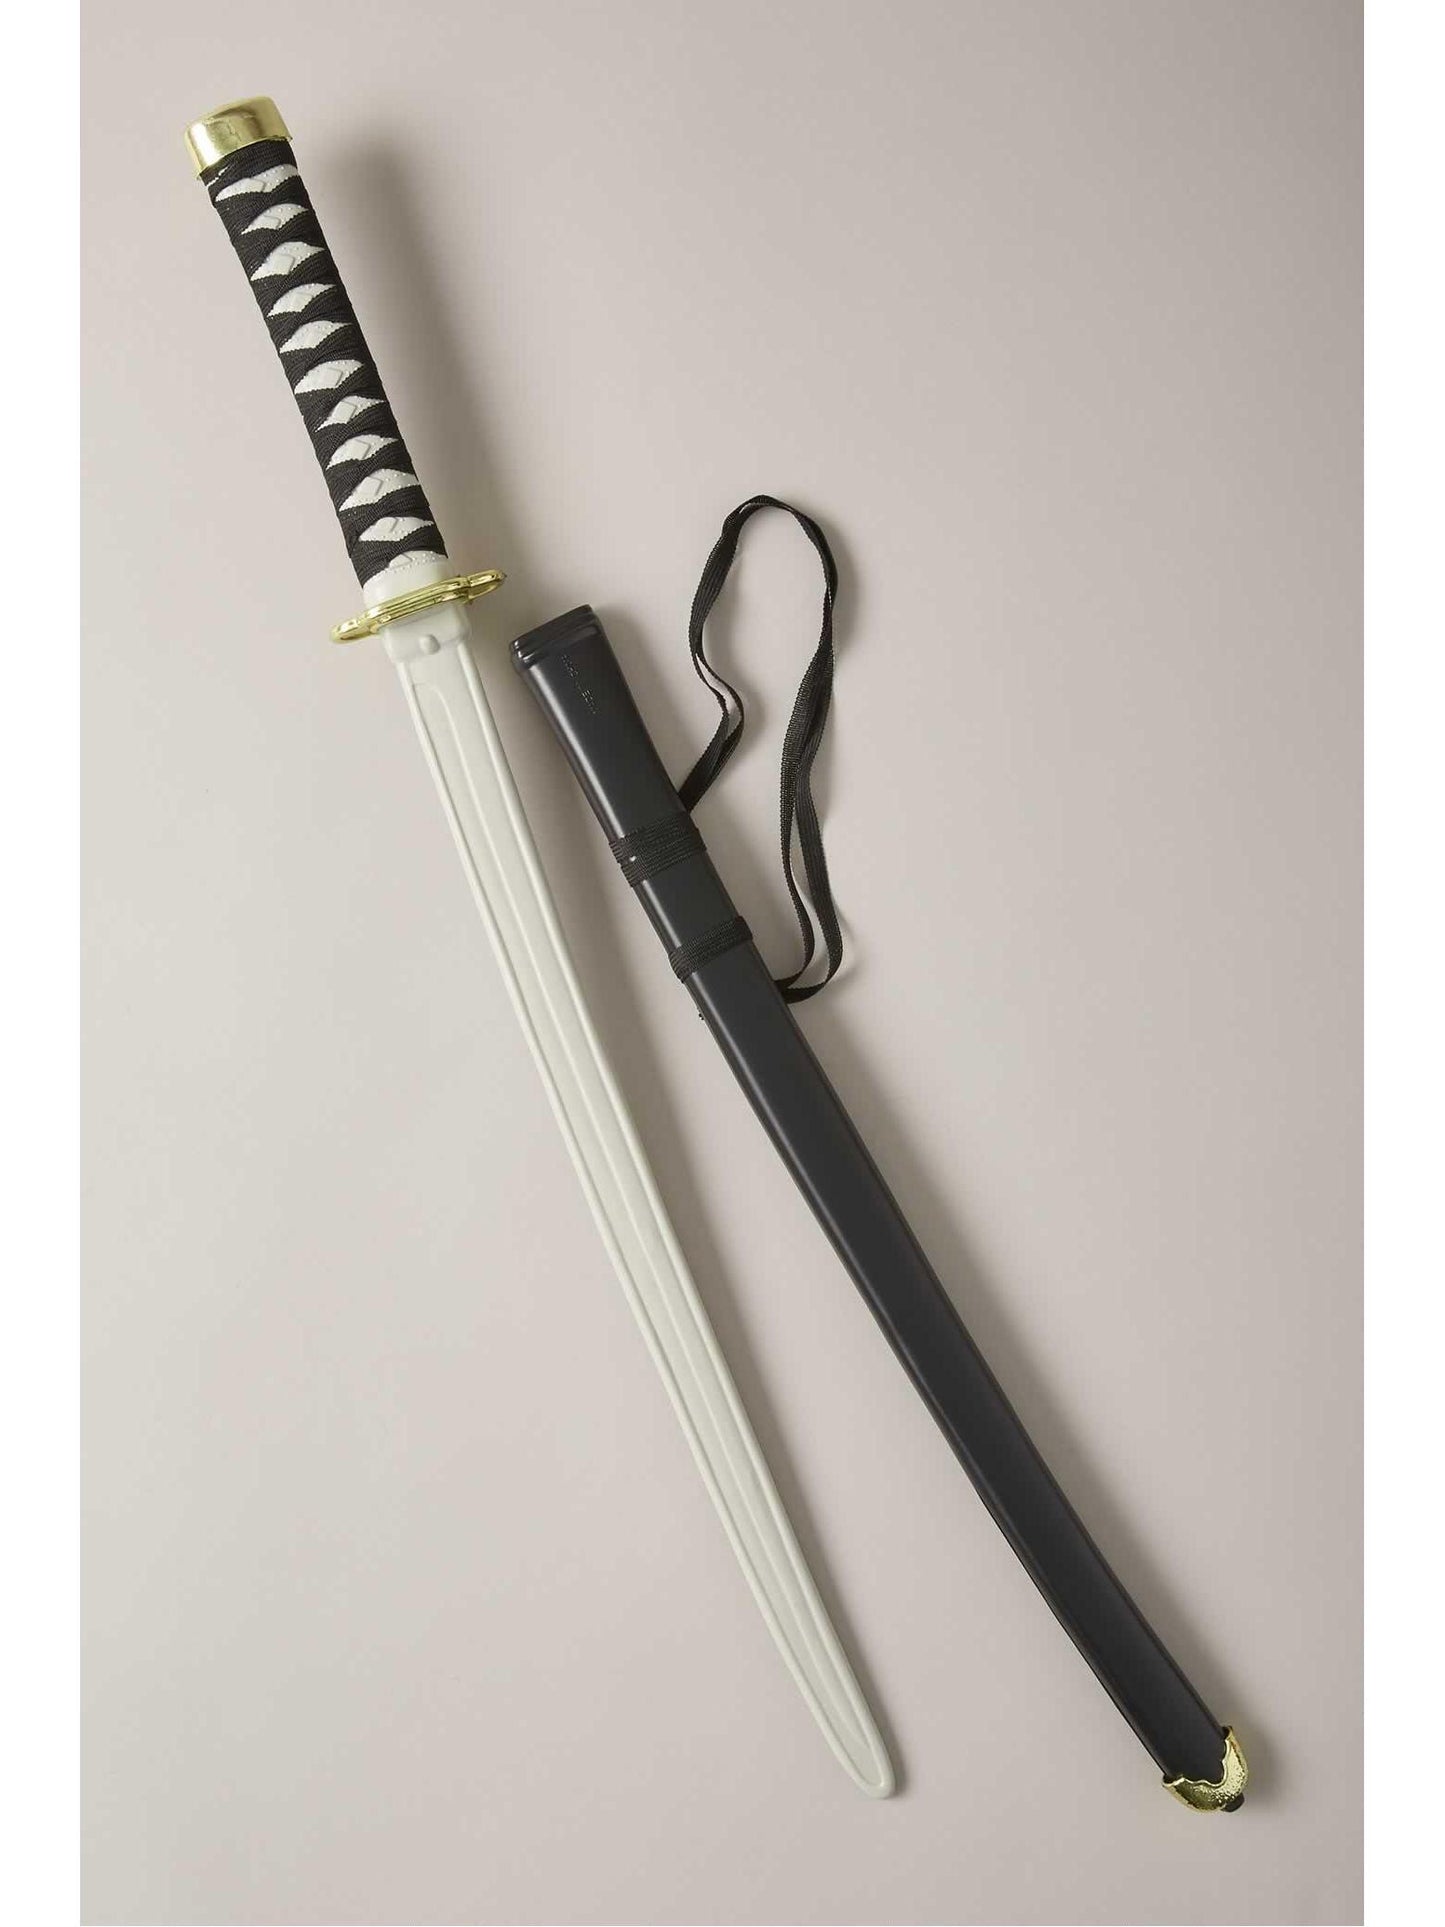 Ninja Sword and Sheath